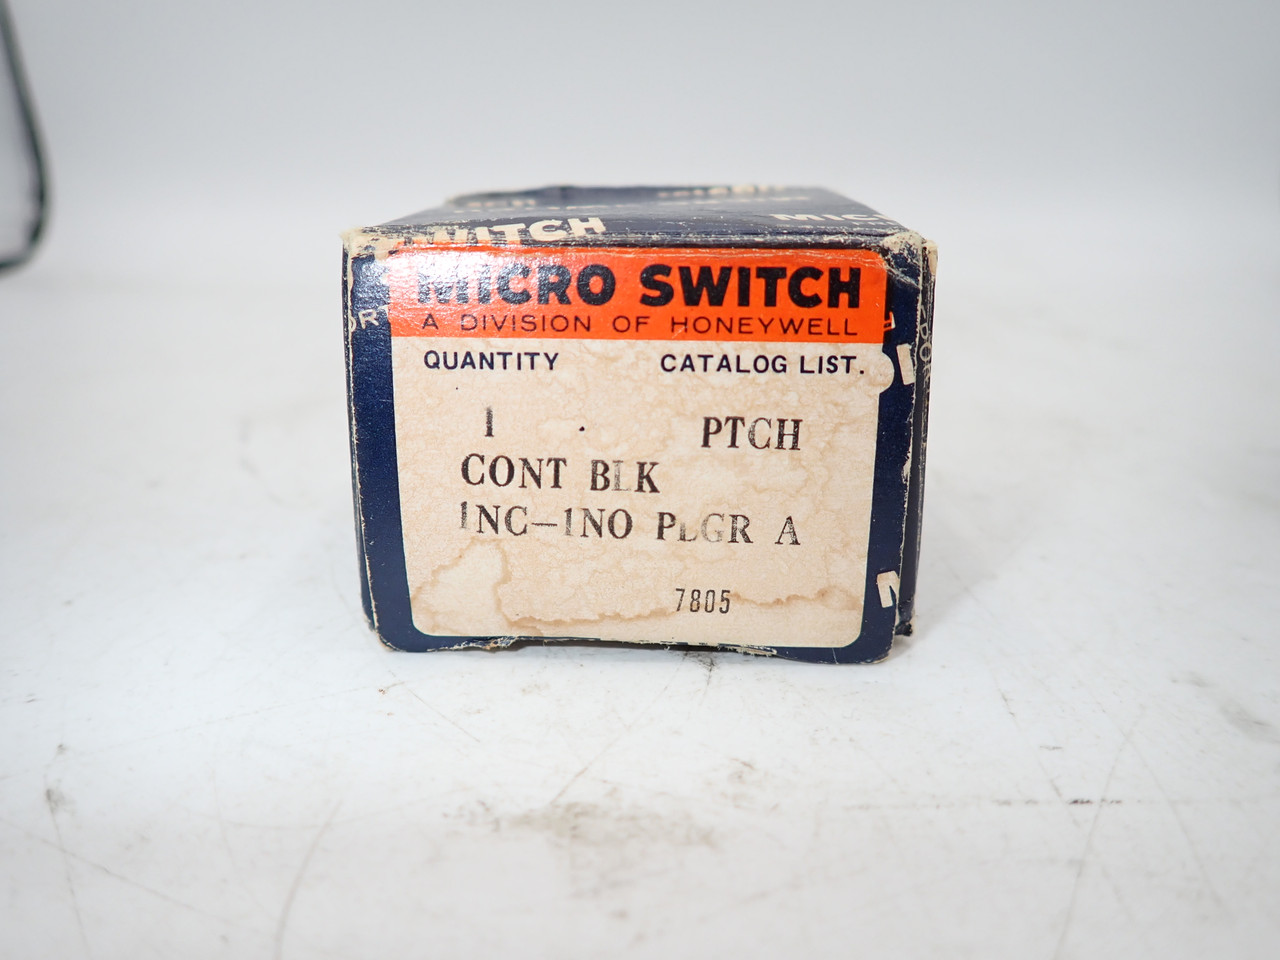 Micro Switch PK-40188 Contact Block 1NC-1NO